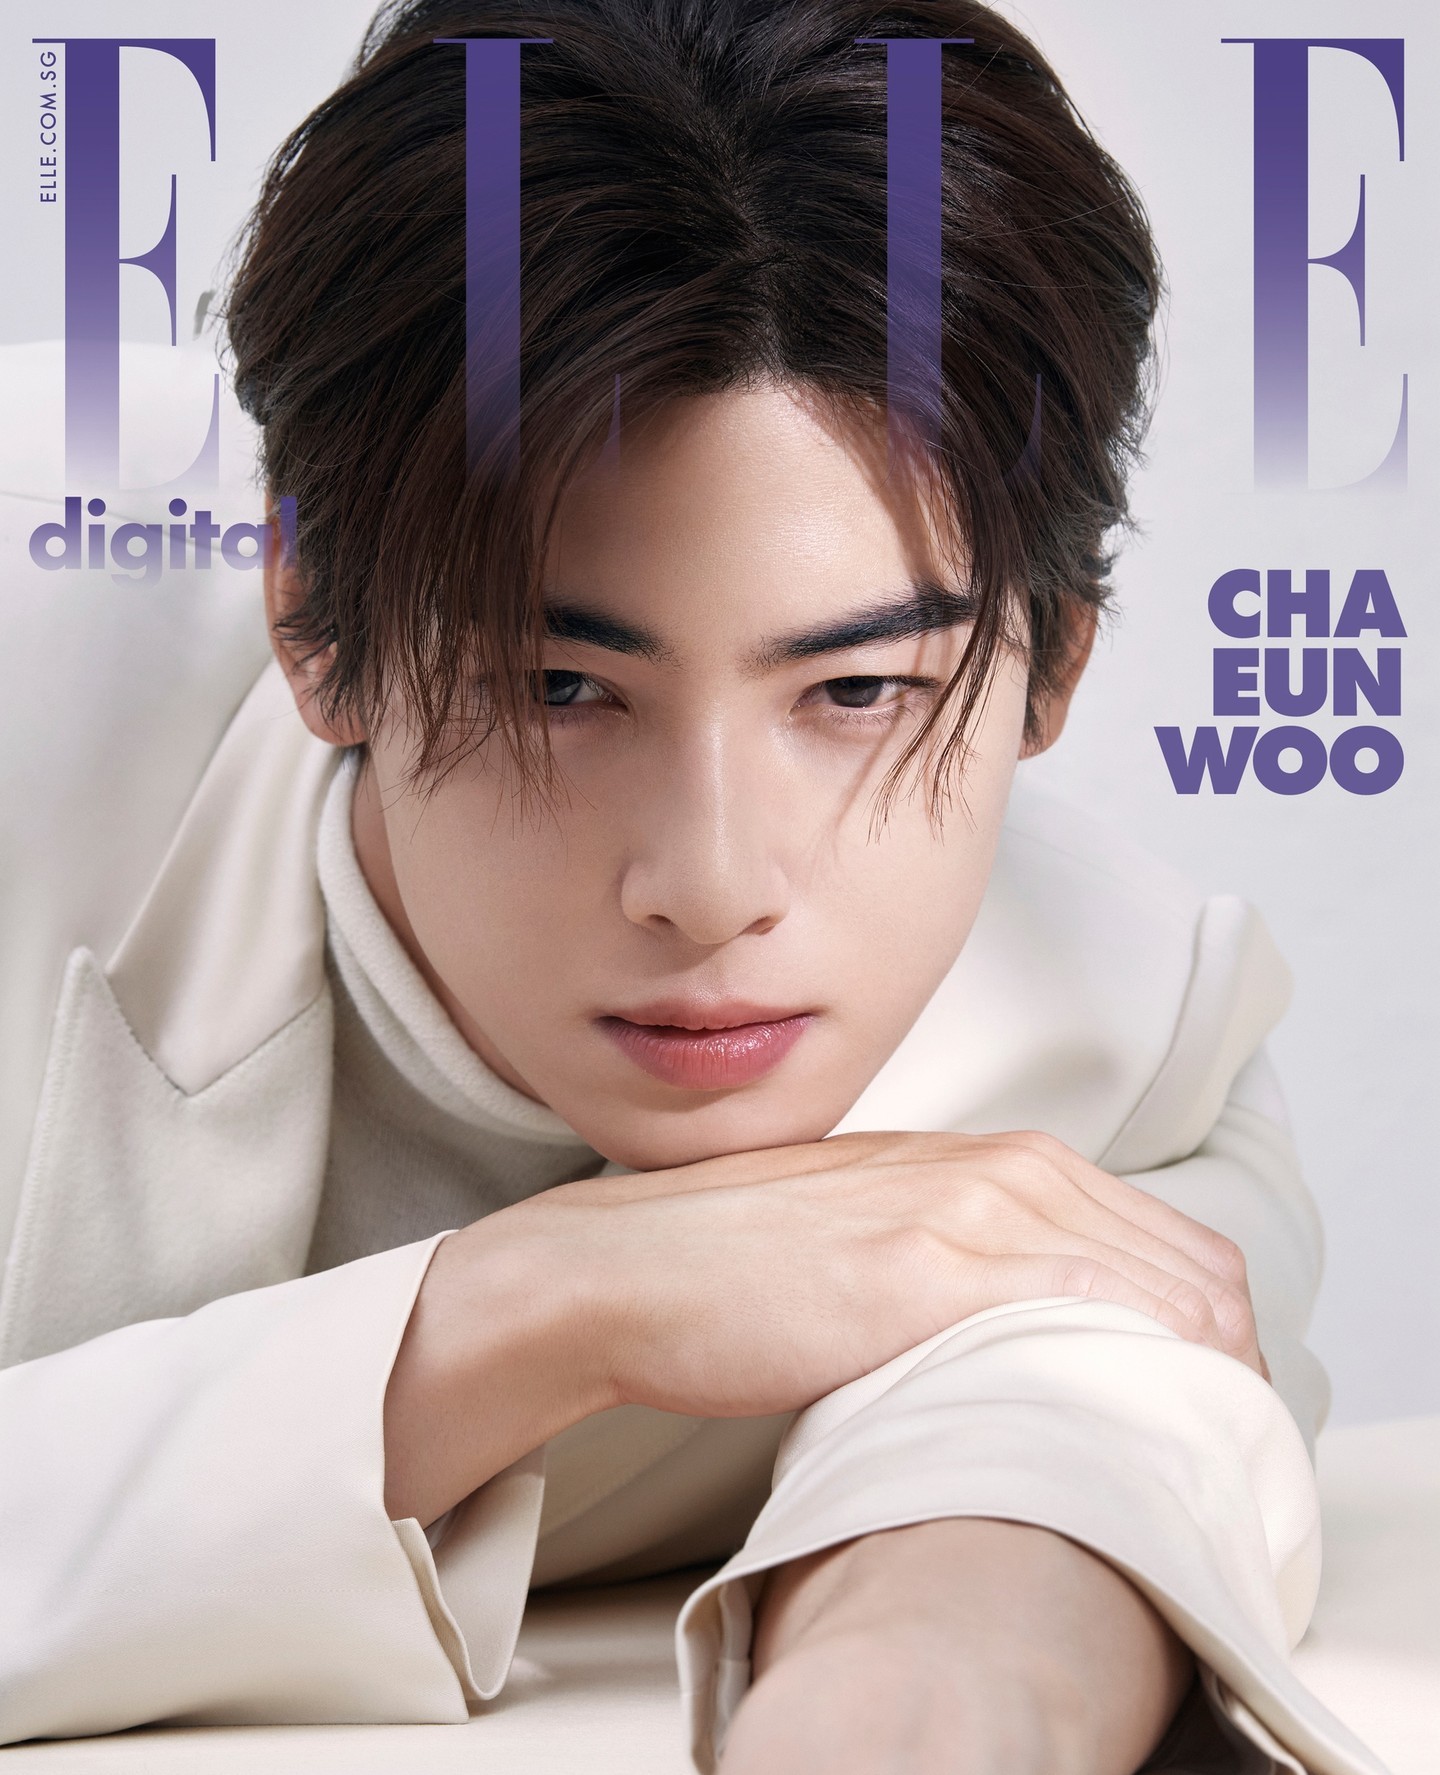 Cha Eun Woo Models Dior for Elle Korea January 2023 Issue